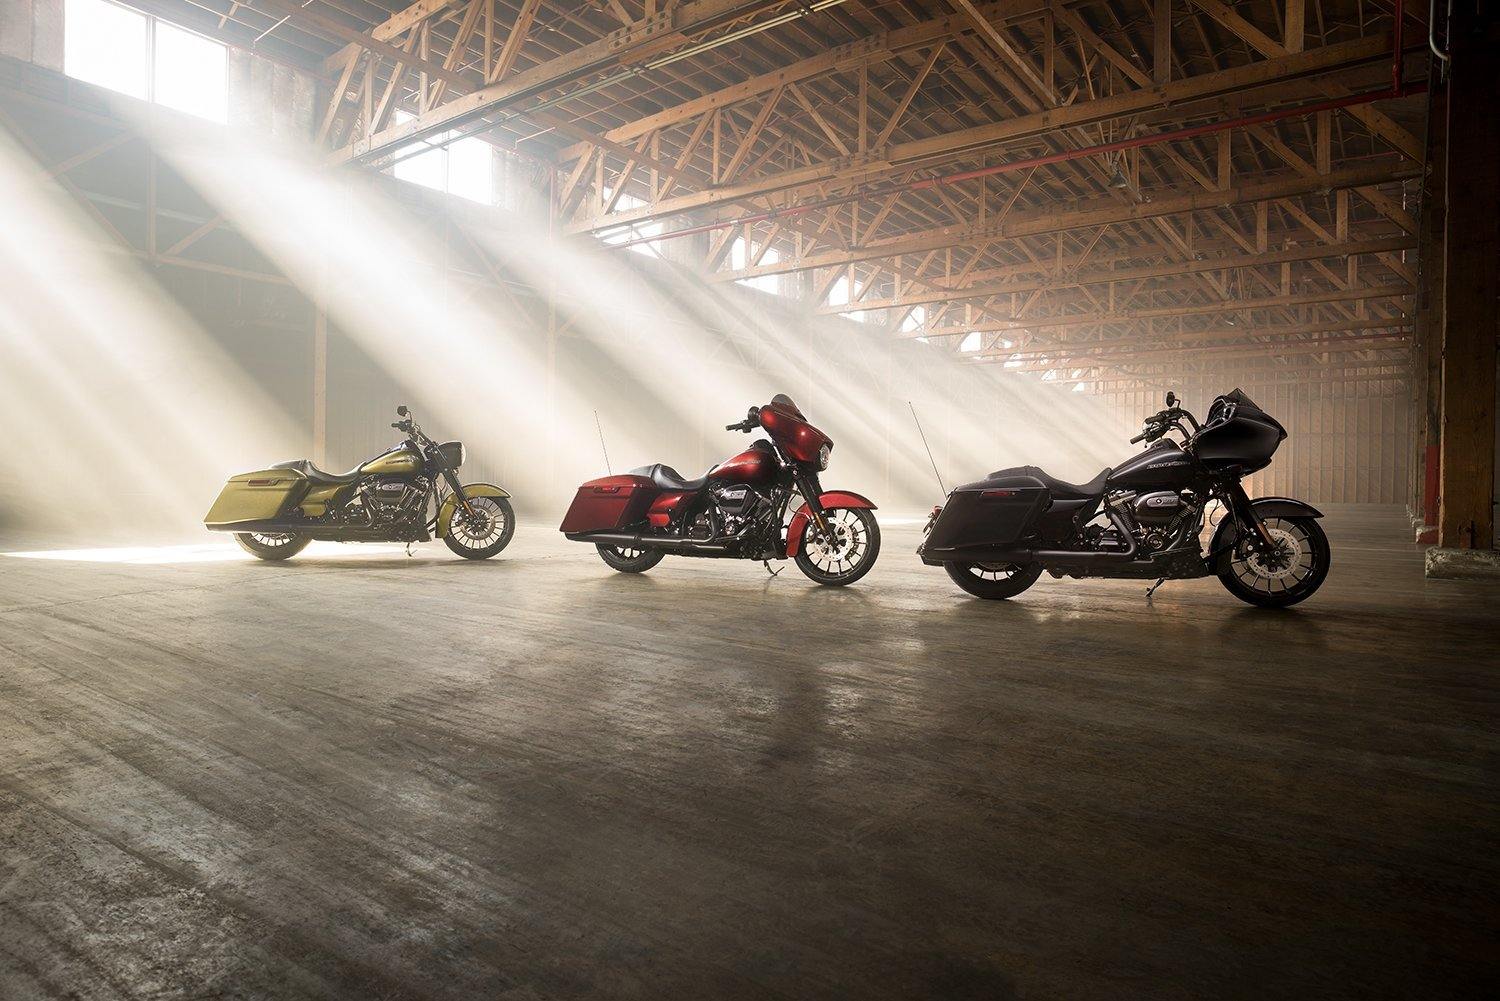 New 2018 Street Glide - Rolling Thunder Harley-Davidson